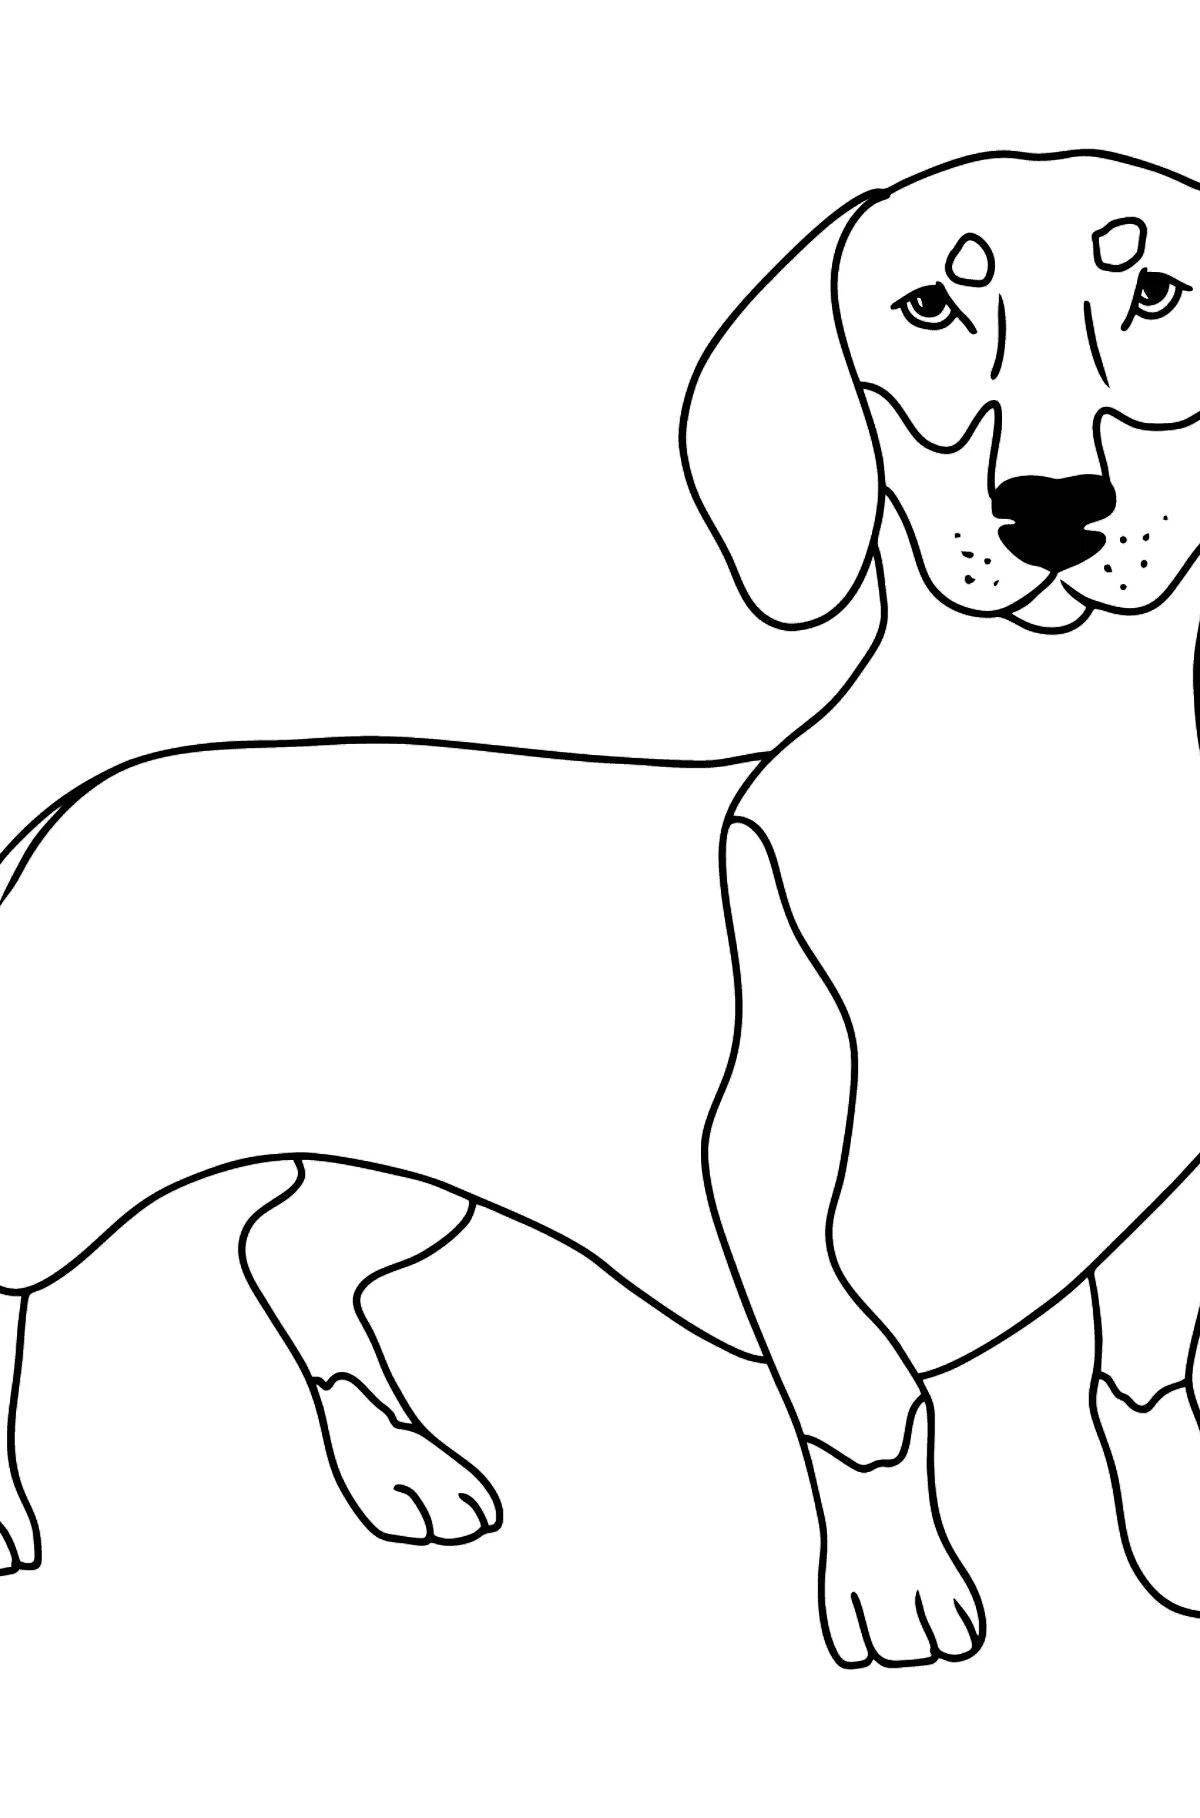 Colouring bright dachshund